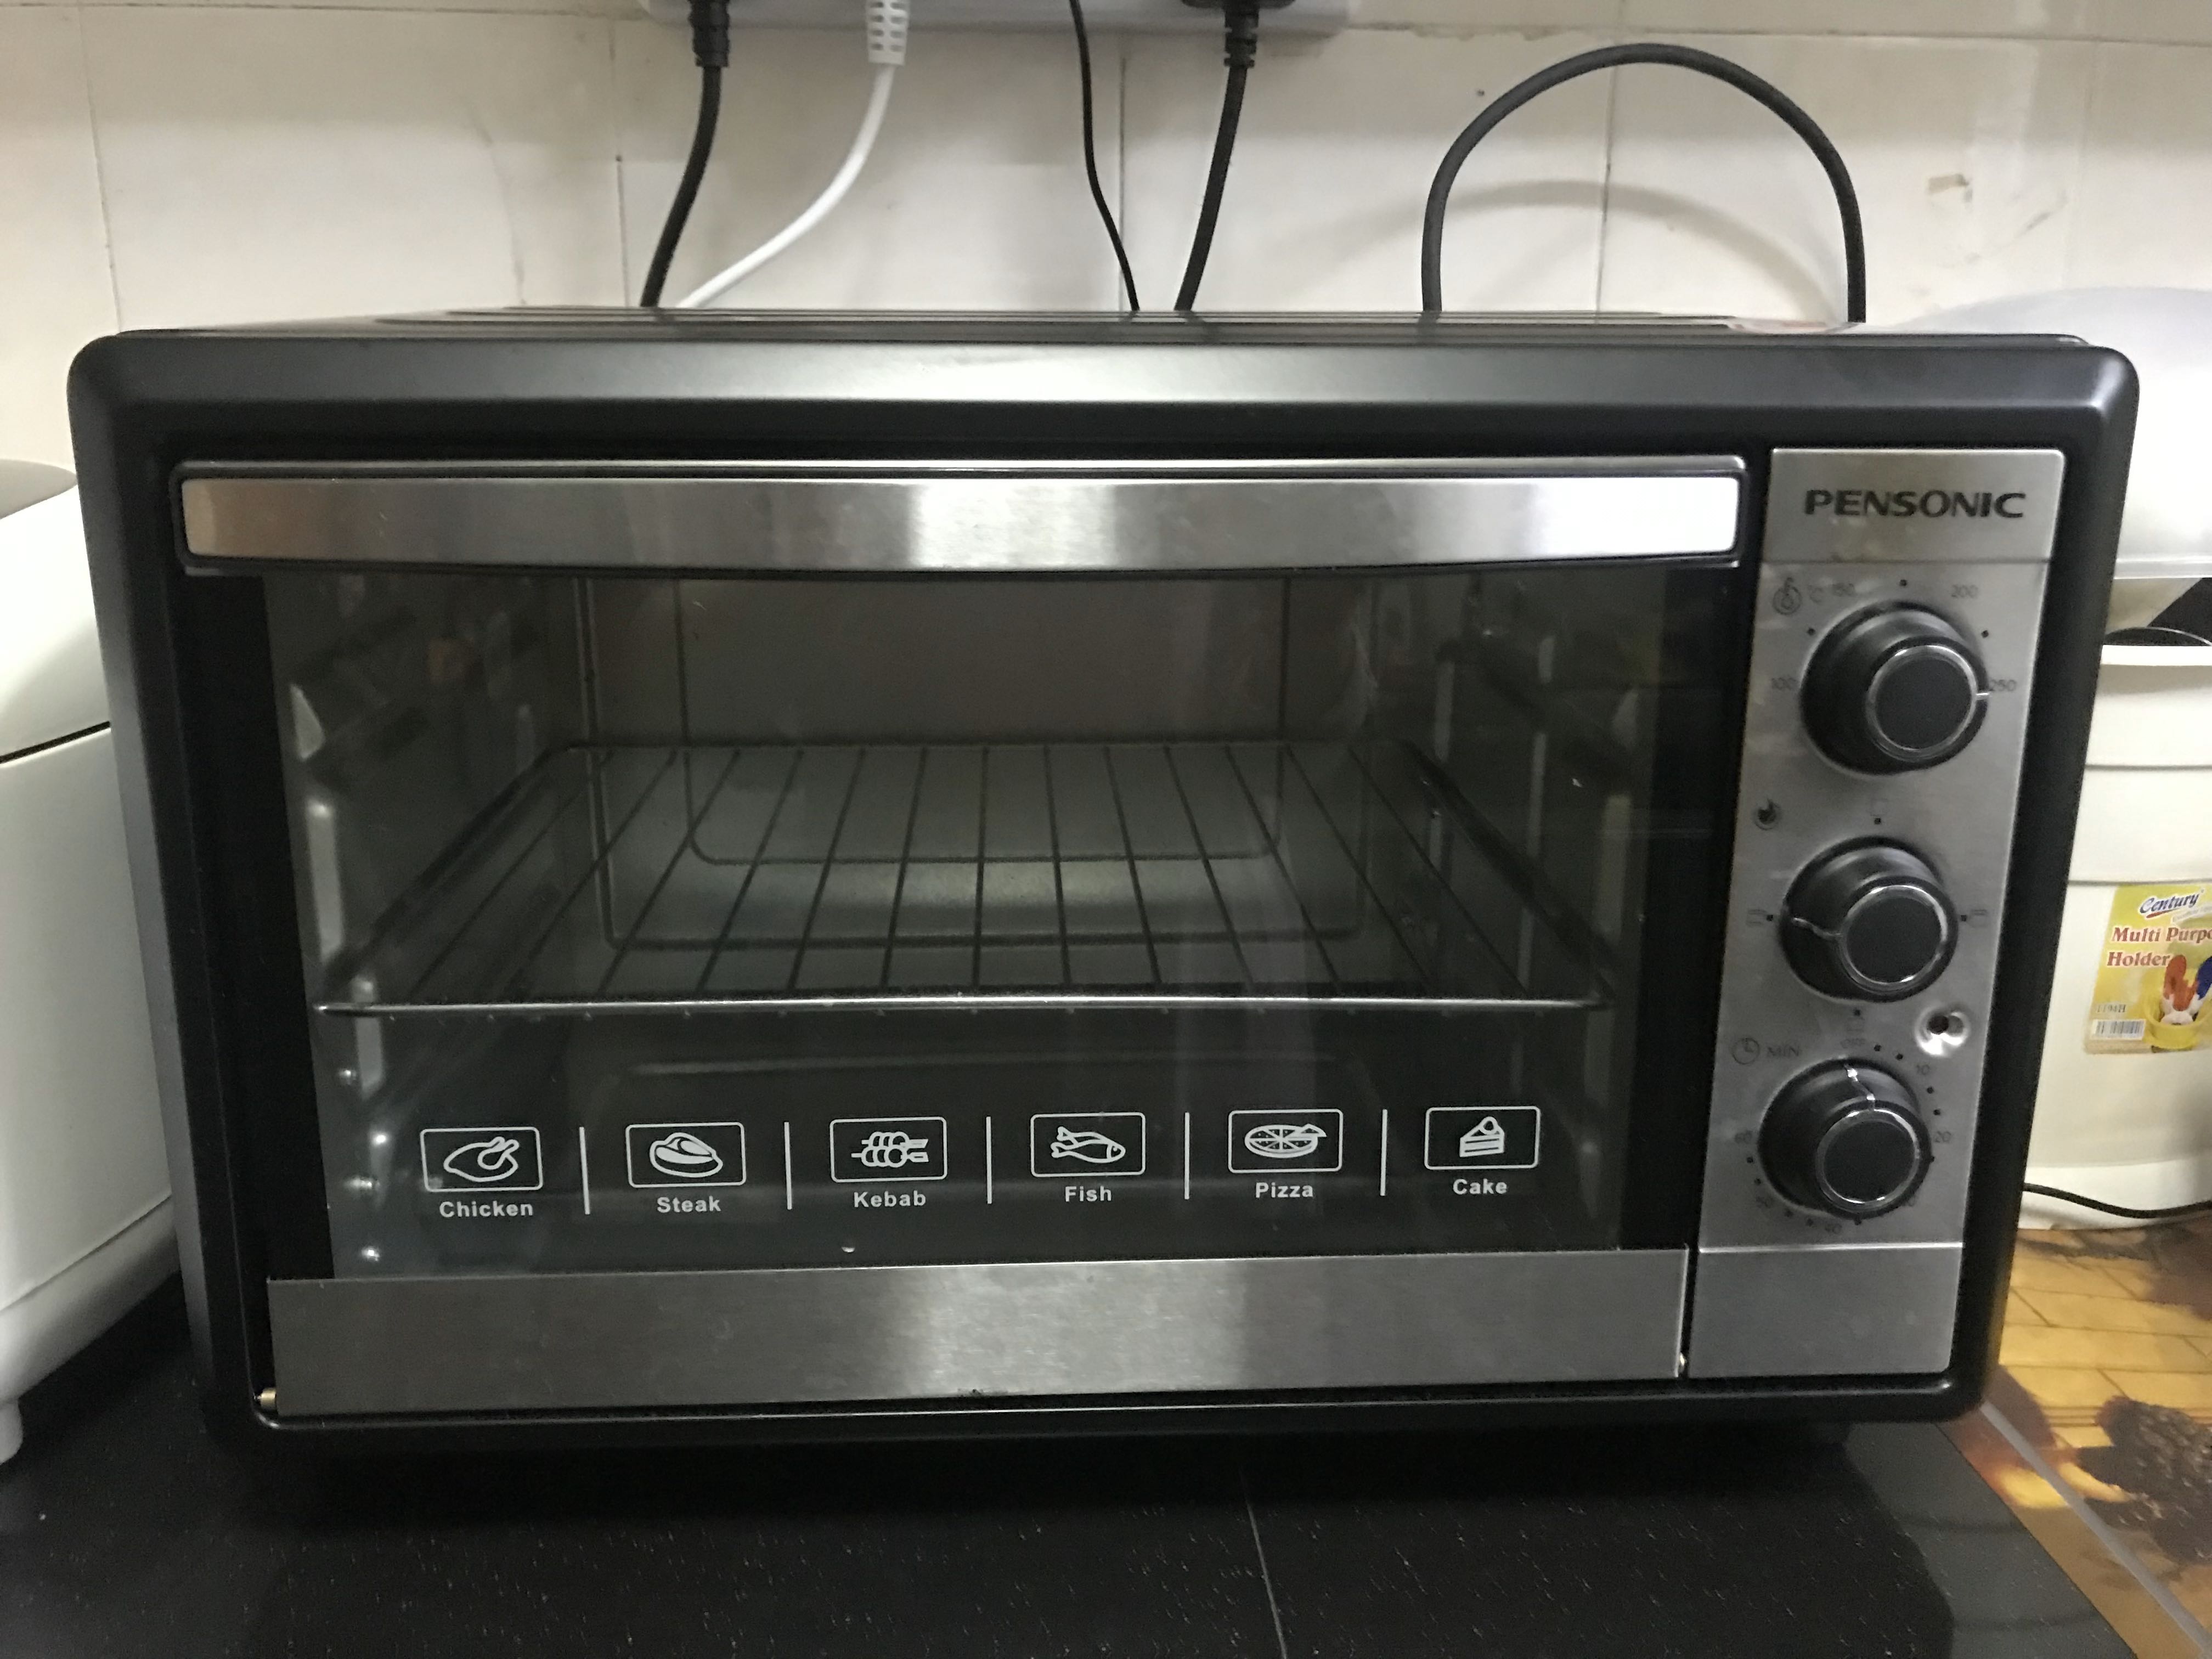 Pensonic Oven, TV & Home Appliances, Kitchen Appliances, Ovens ...